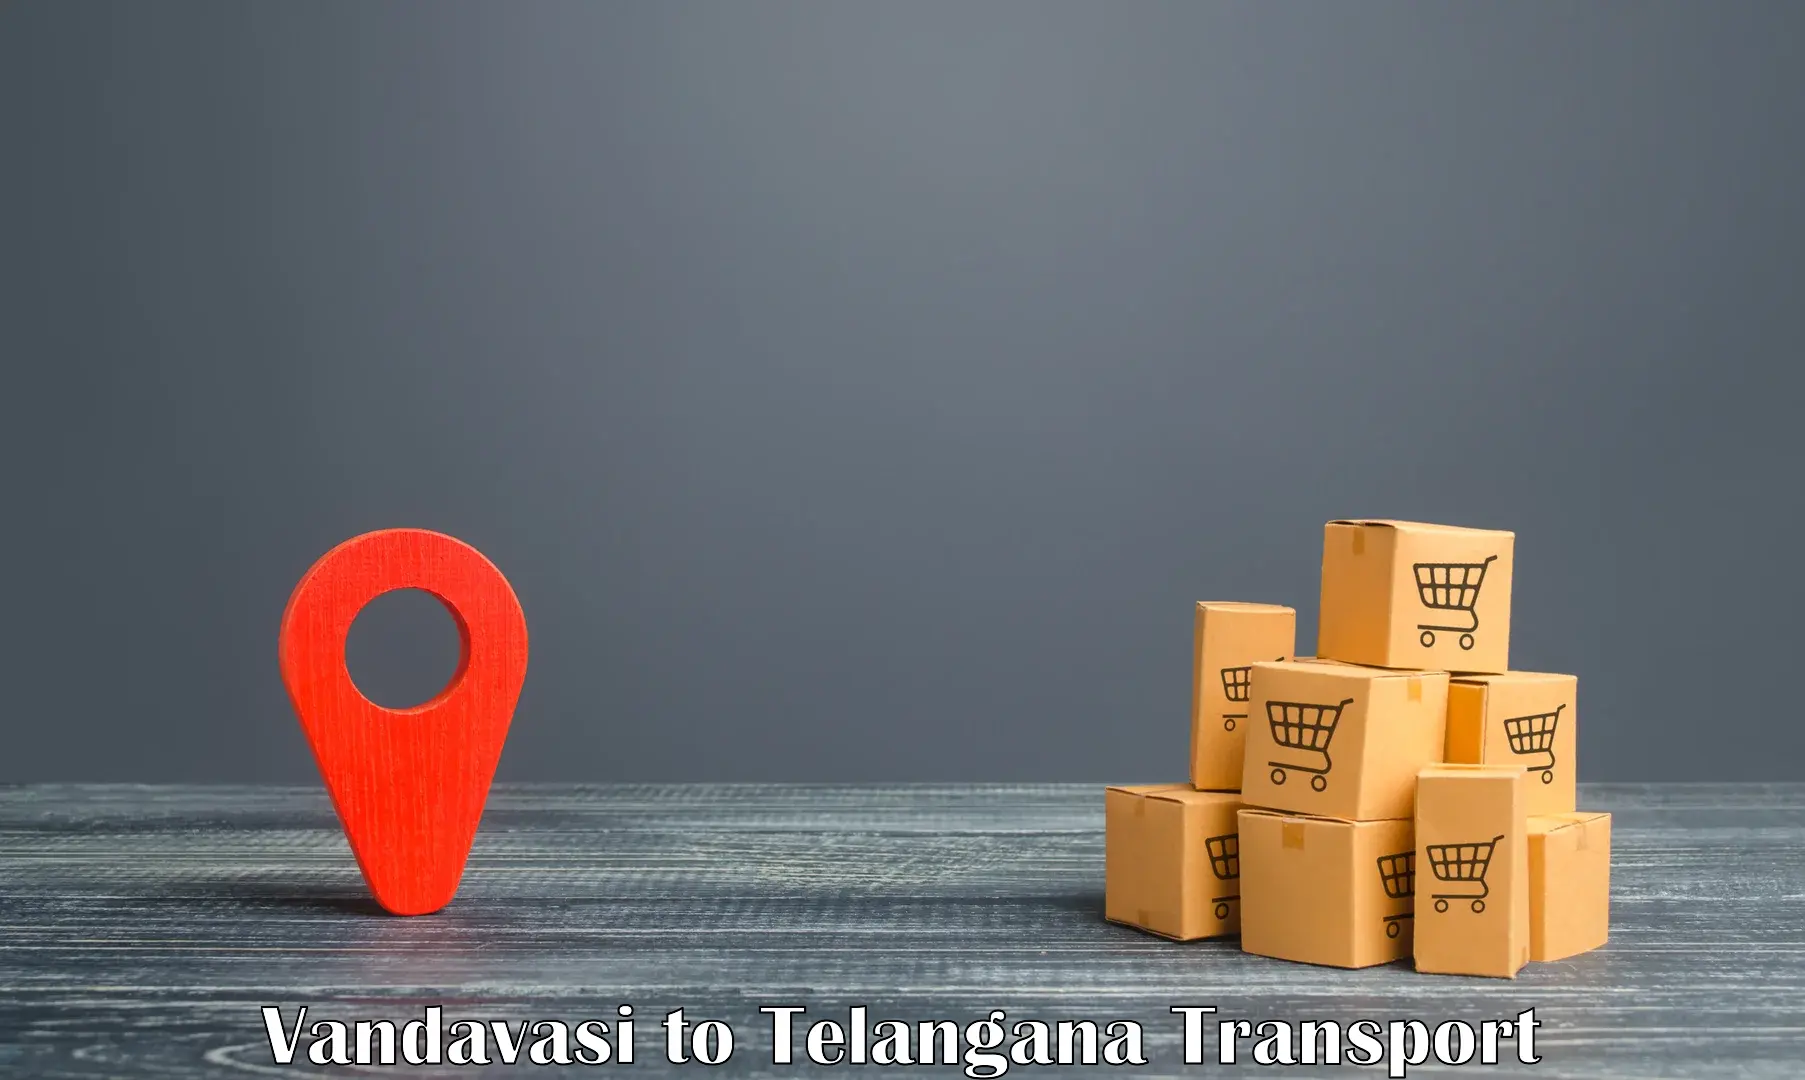 Road transport online services in Vandavasi to Medak